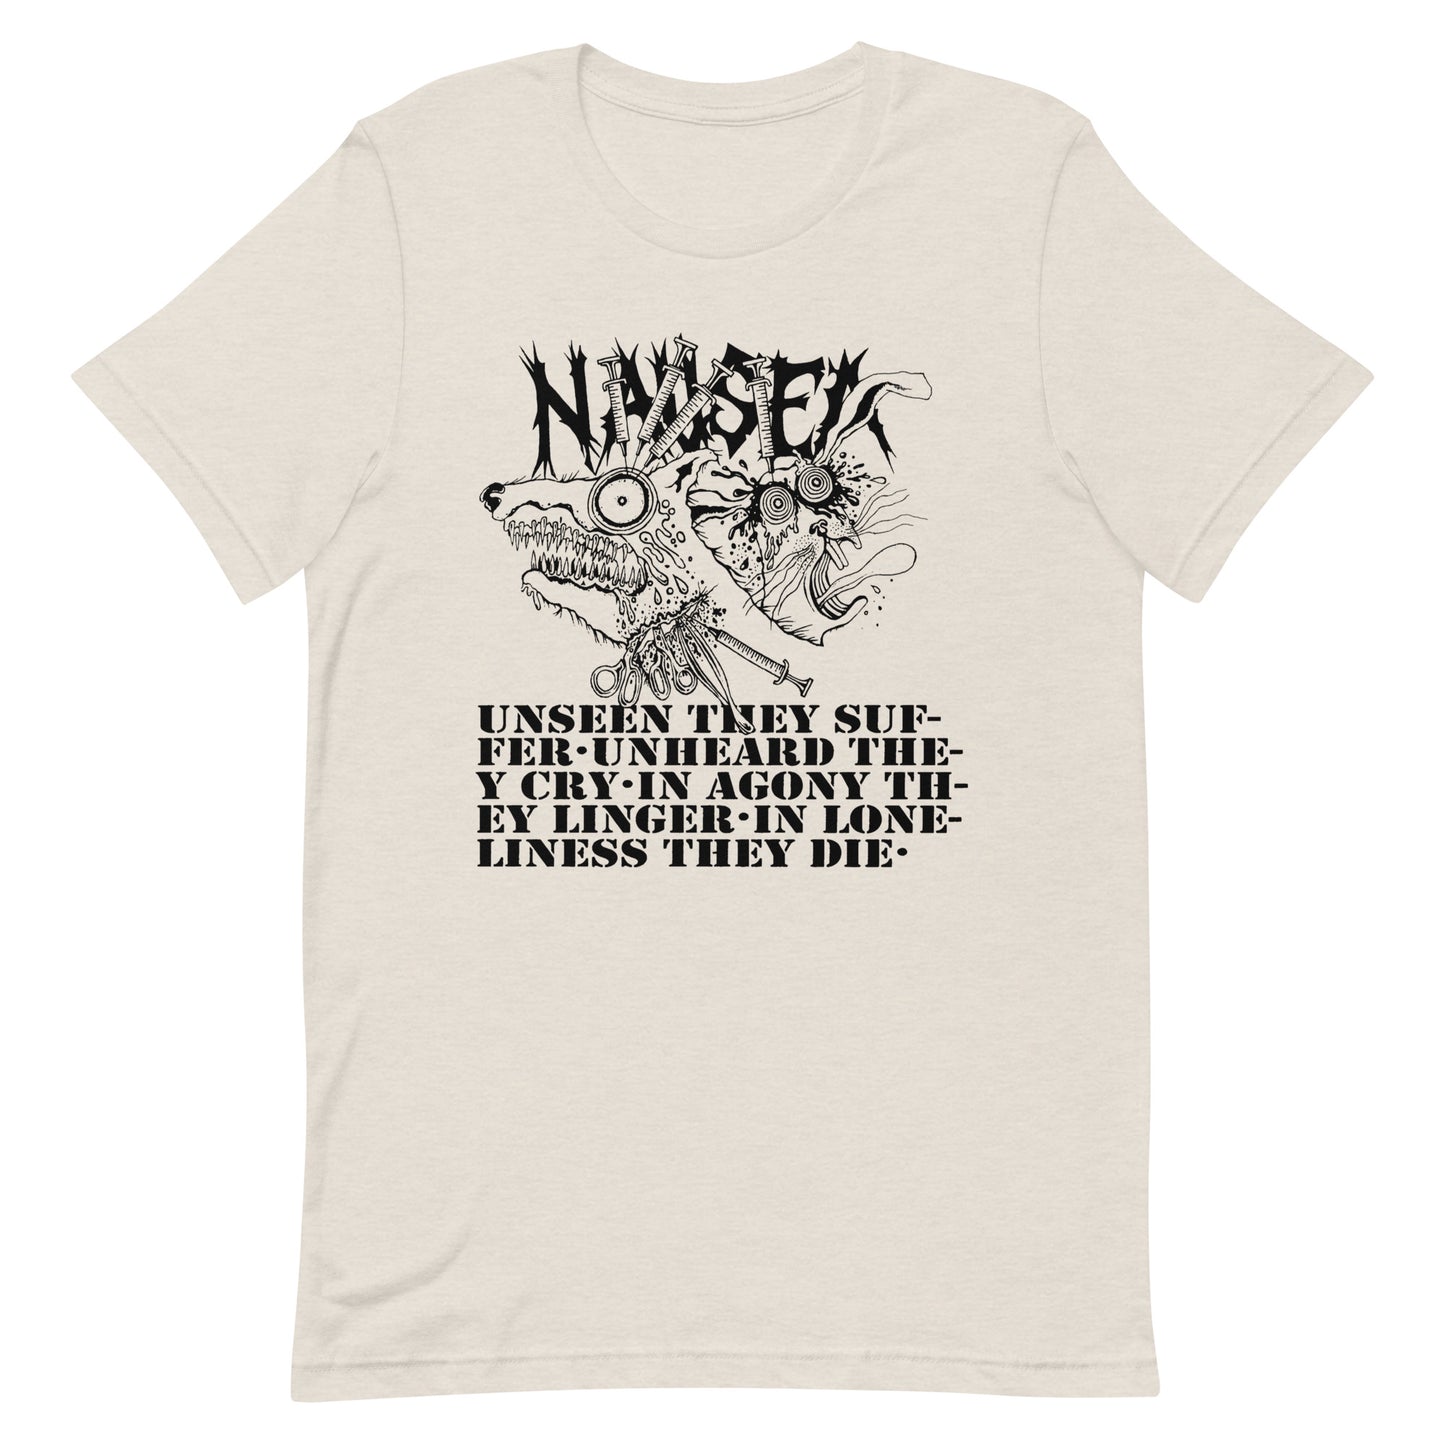 Nausea - Unseen They Suffer T-Shirt